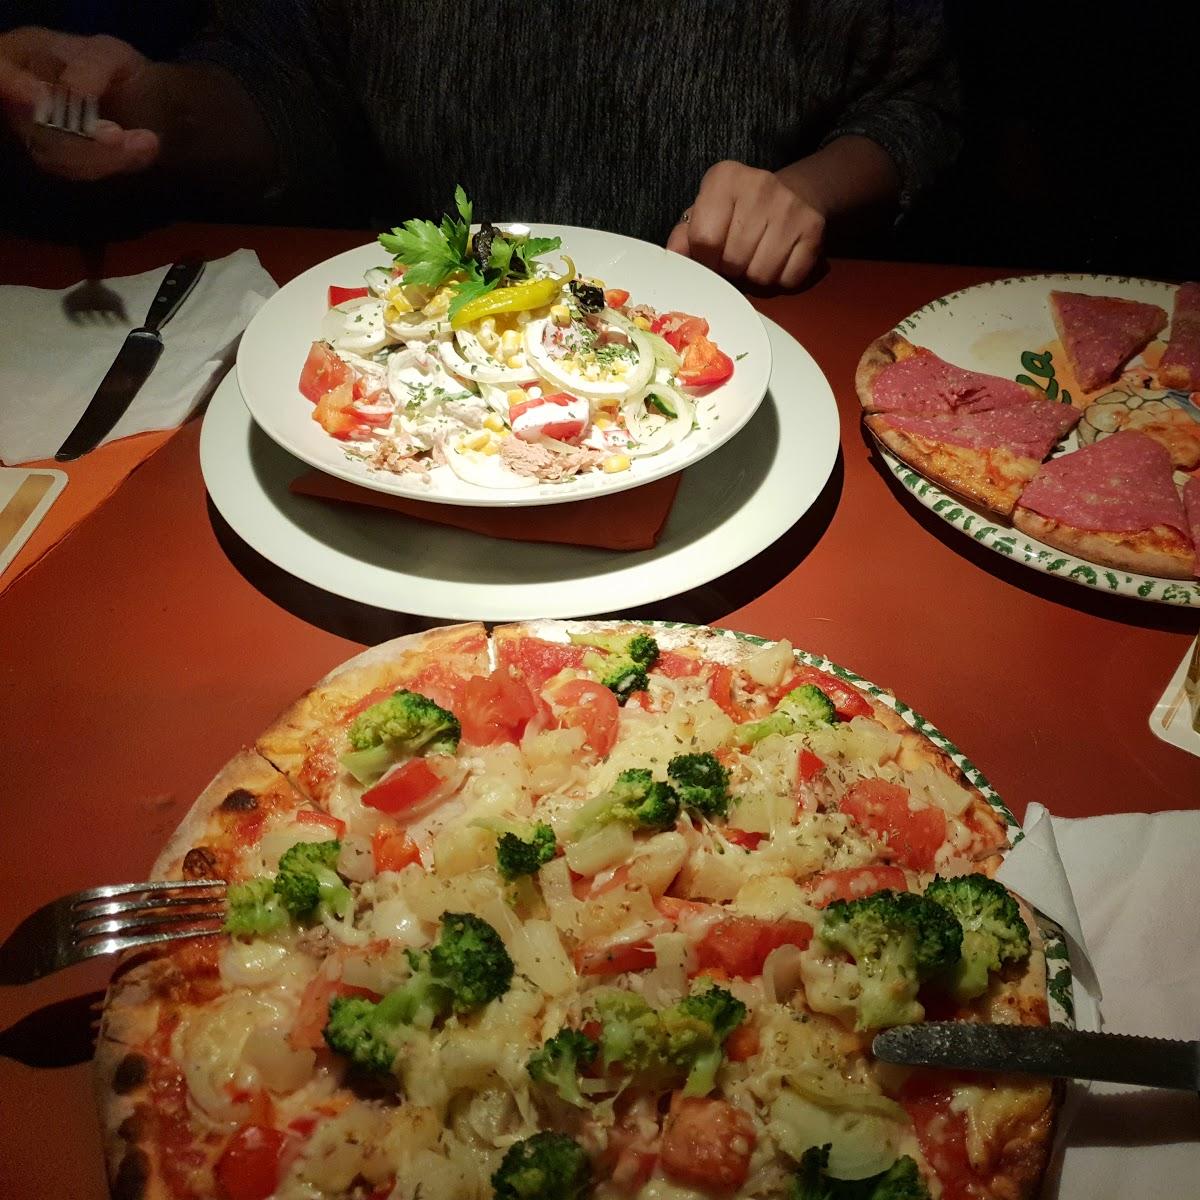 Restaurant "Pizzeria da Toni" in Viersen